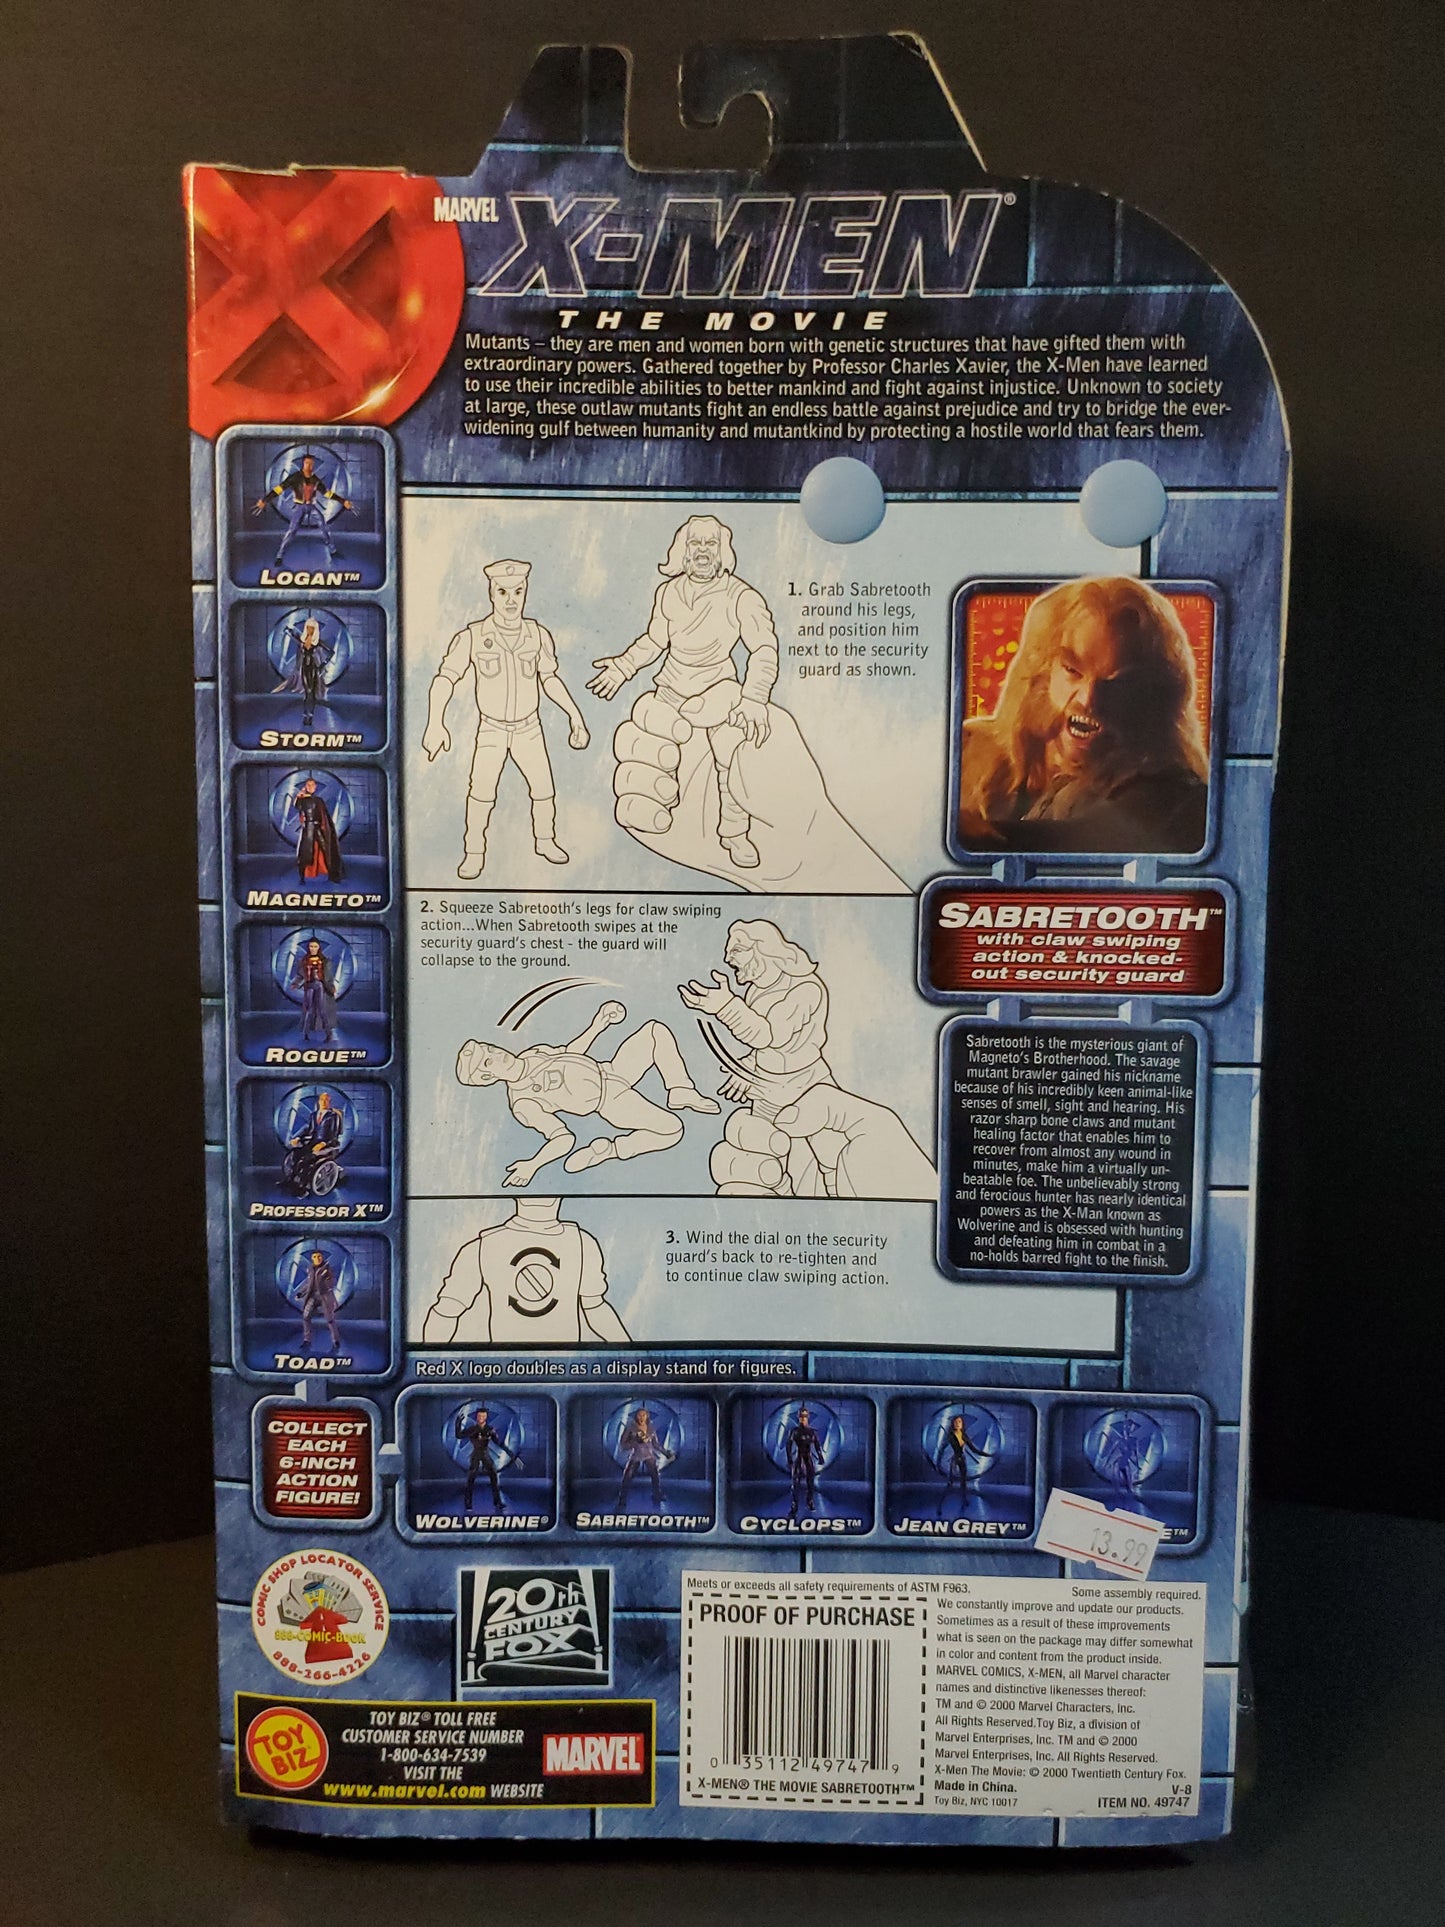 Marvel X-Men Sabretooth The Movie Action figure